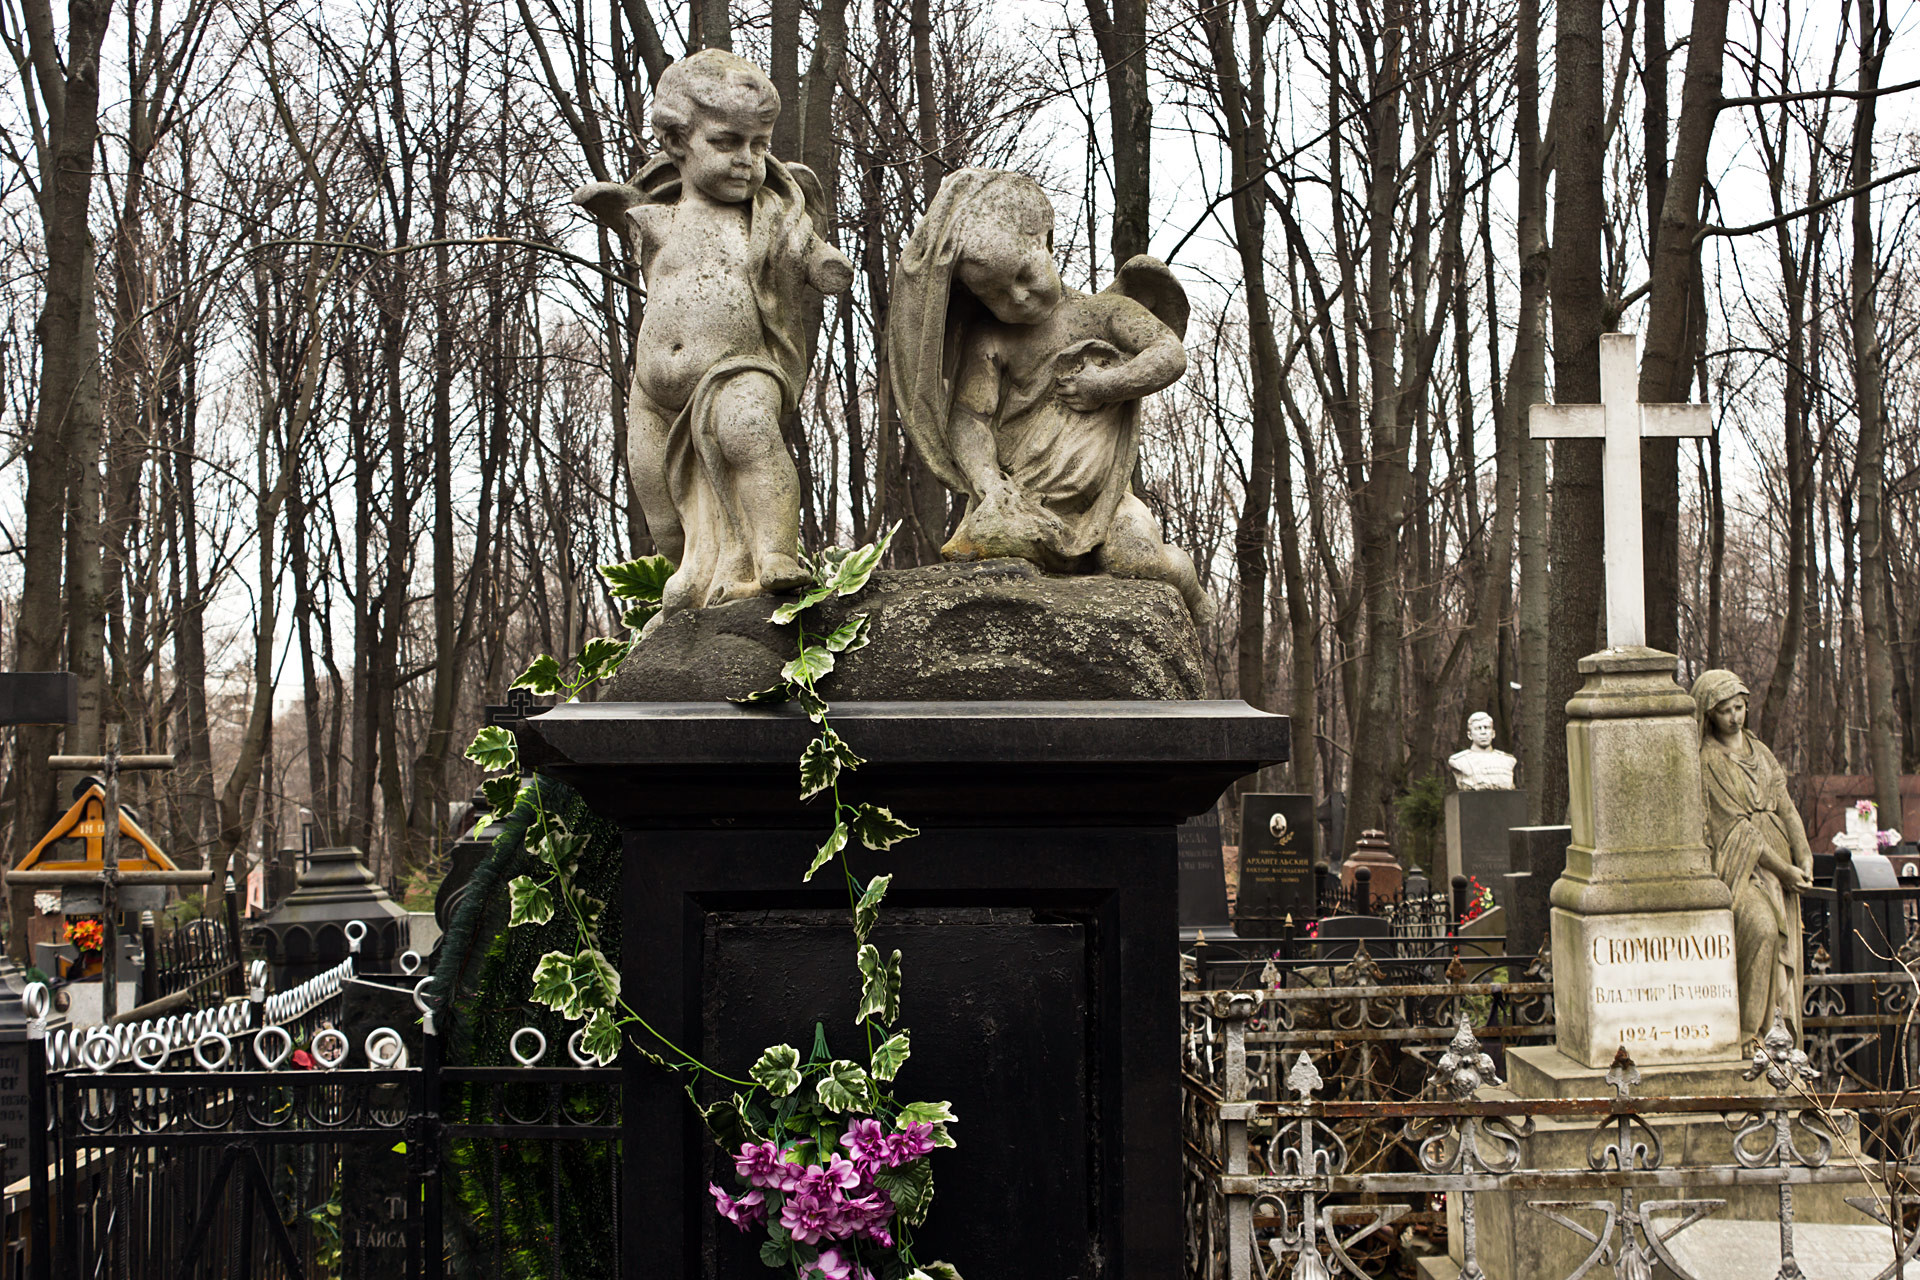 Vvedenskoye cemetery, Moscow, Russia